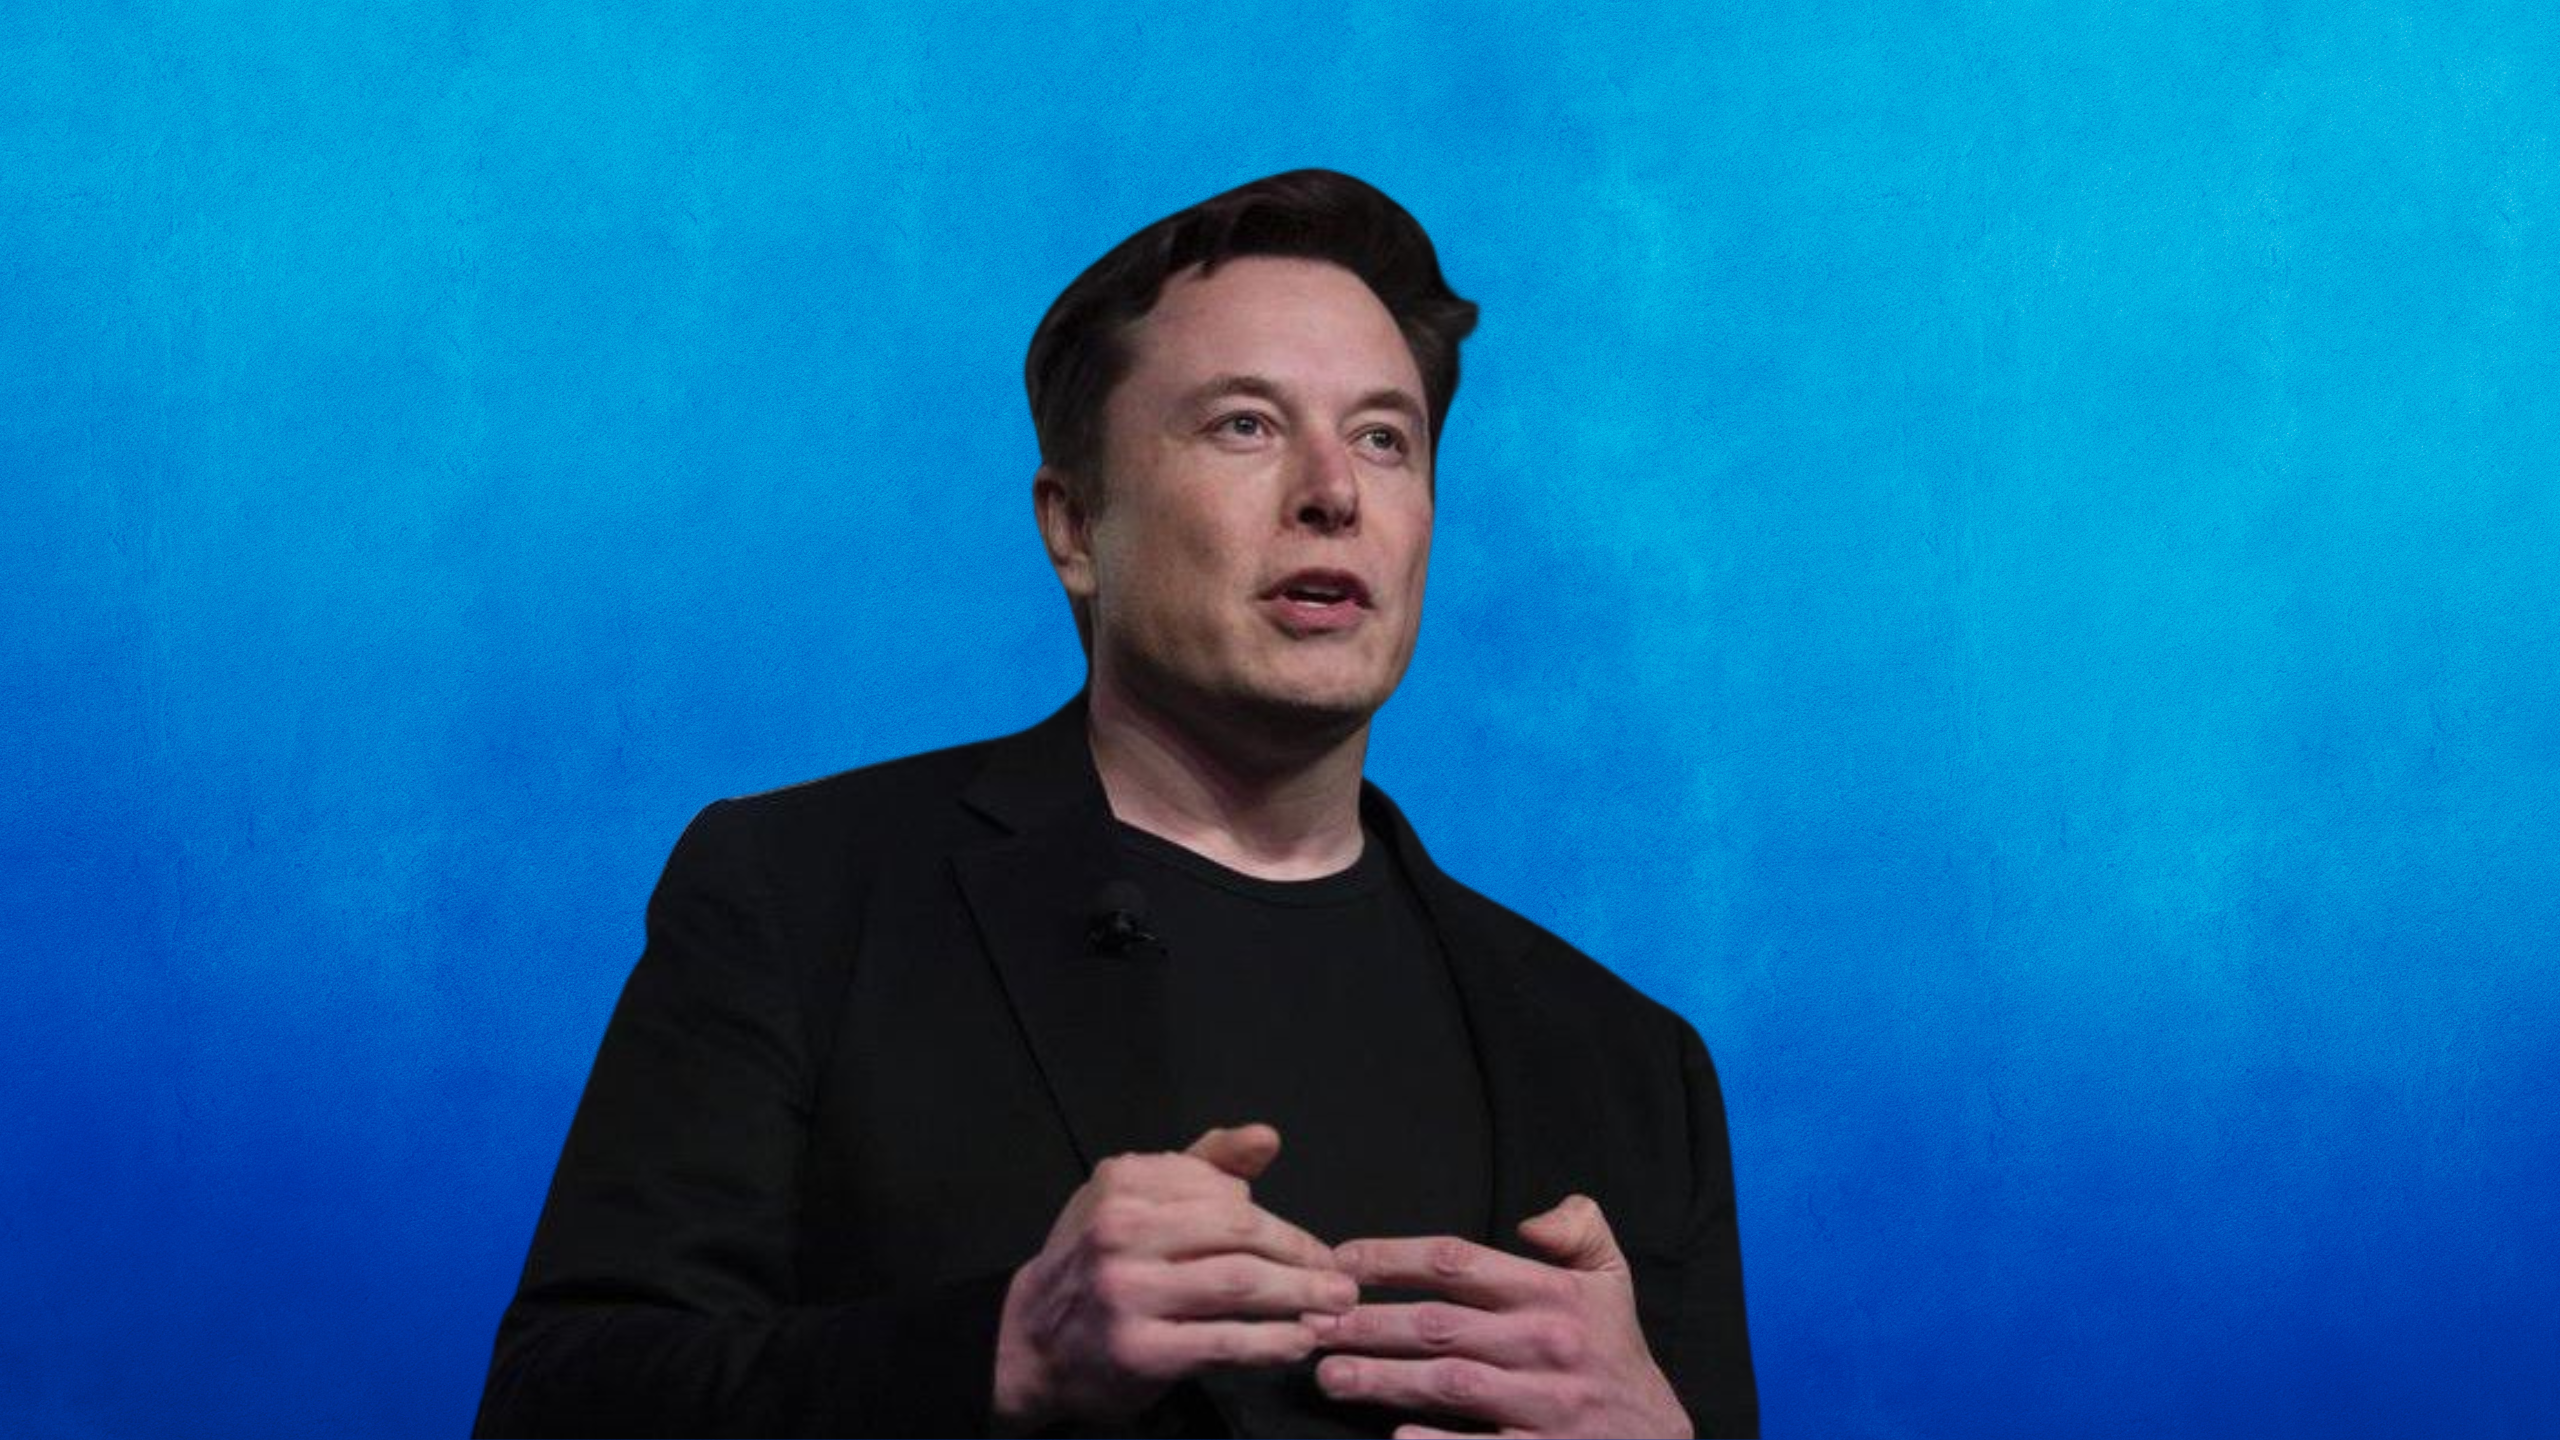 Before xAI Elon Musk had hopes for OpenAI at Tesla